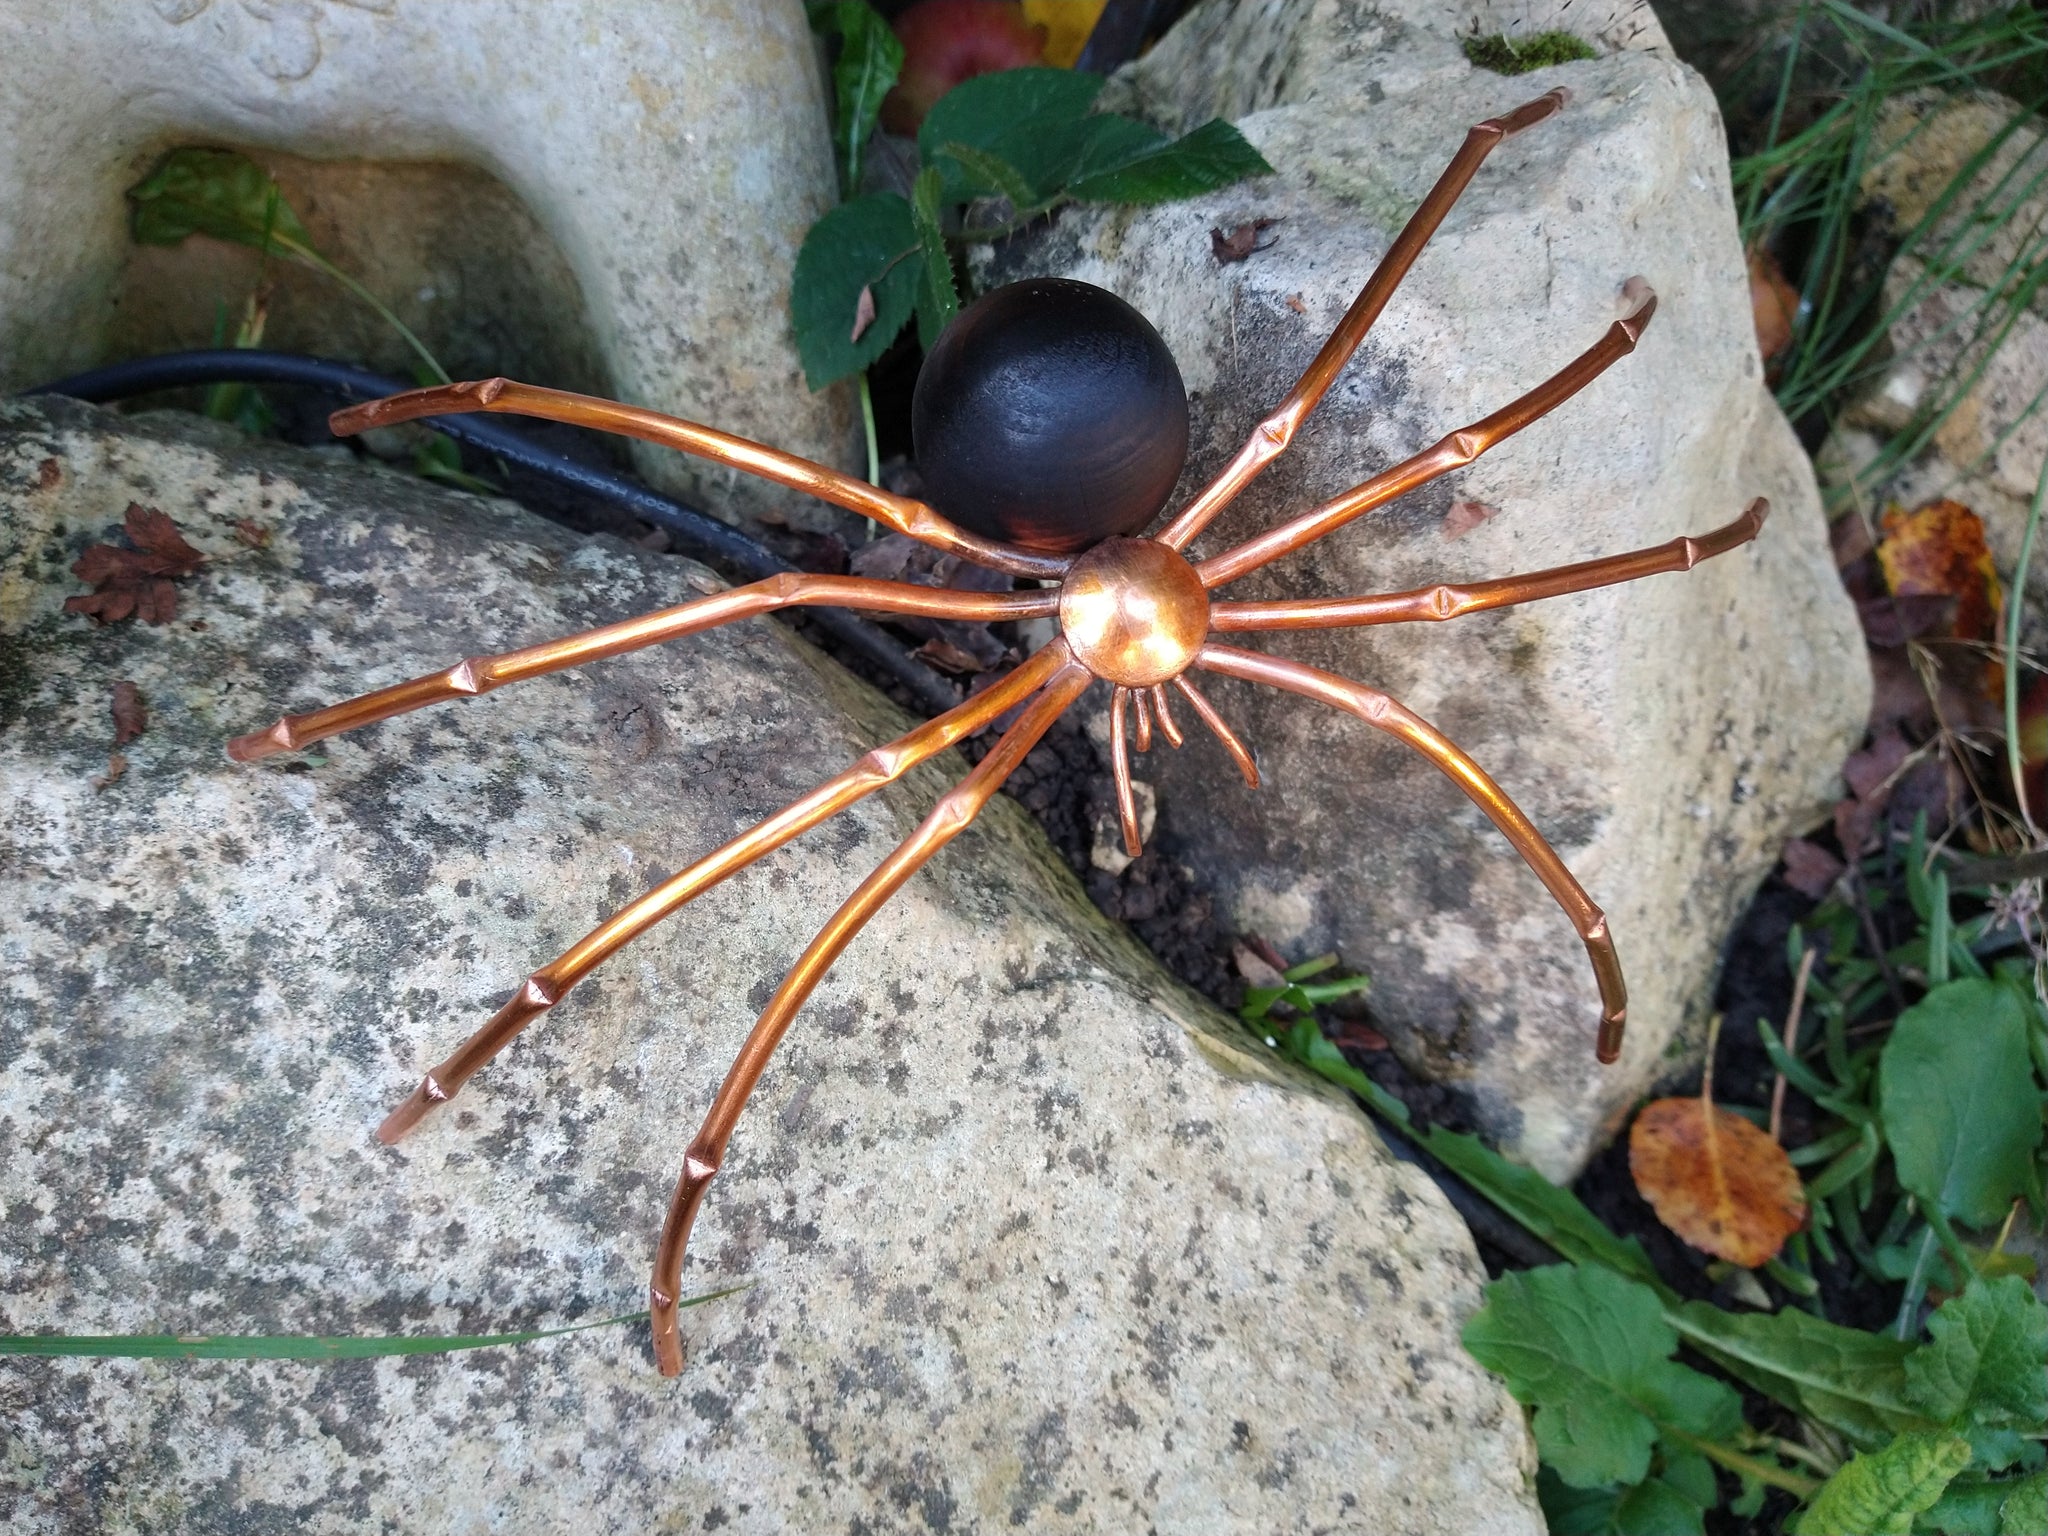 Metal spider sculpture